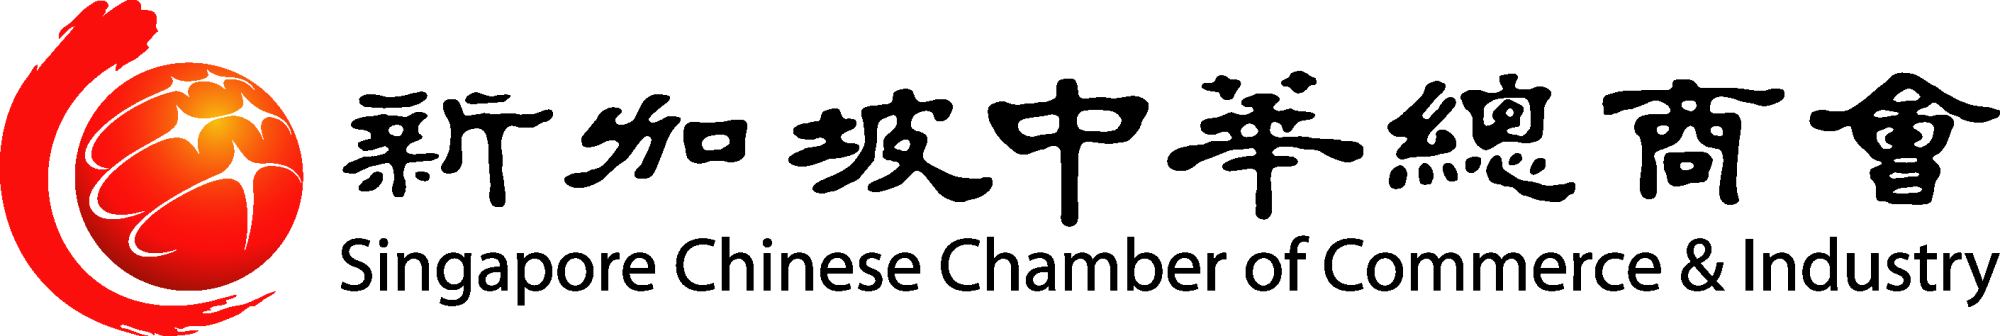 SCCCI Logo.png